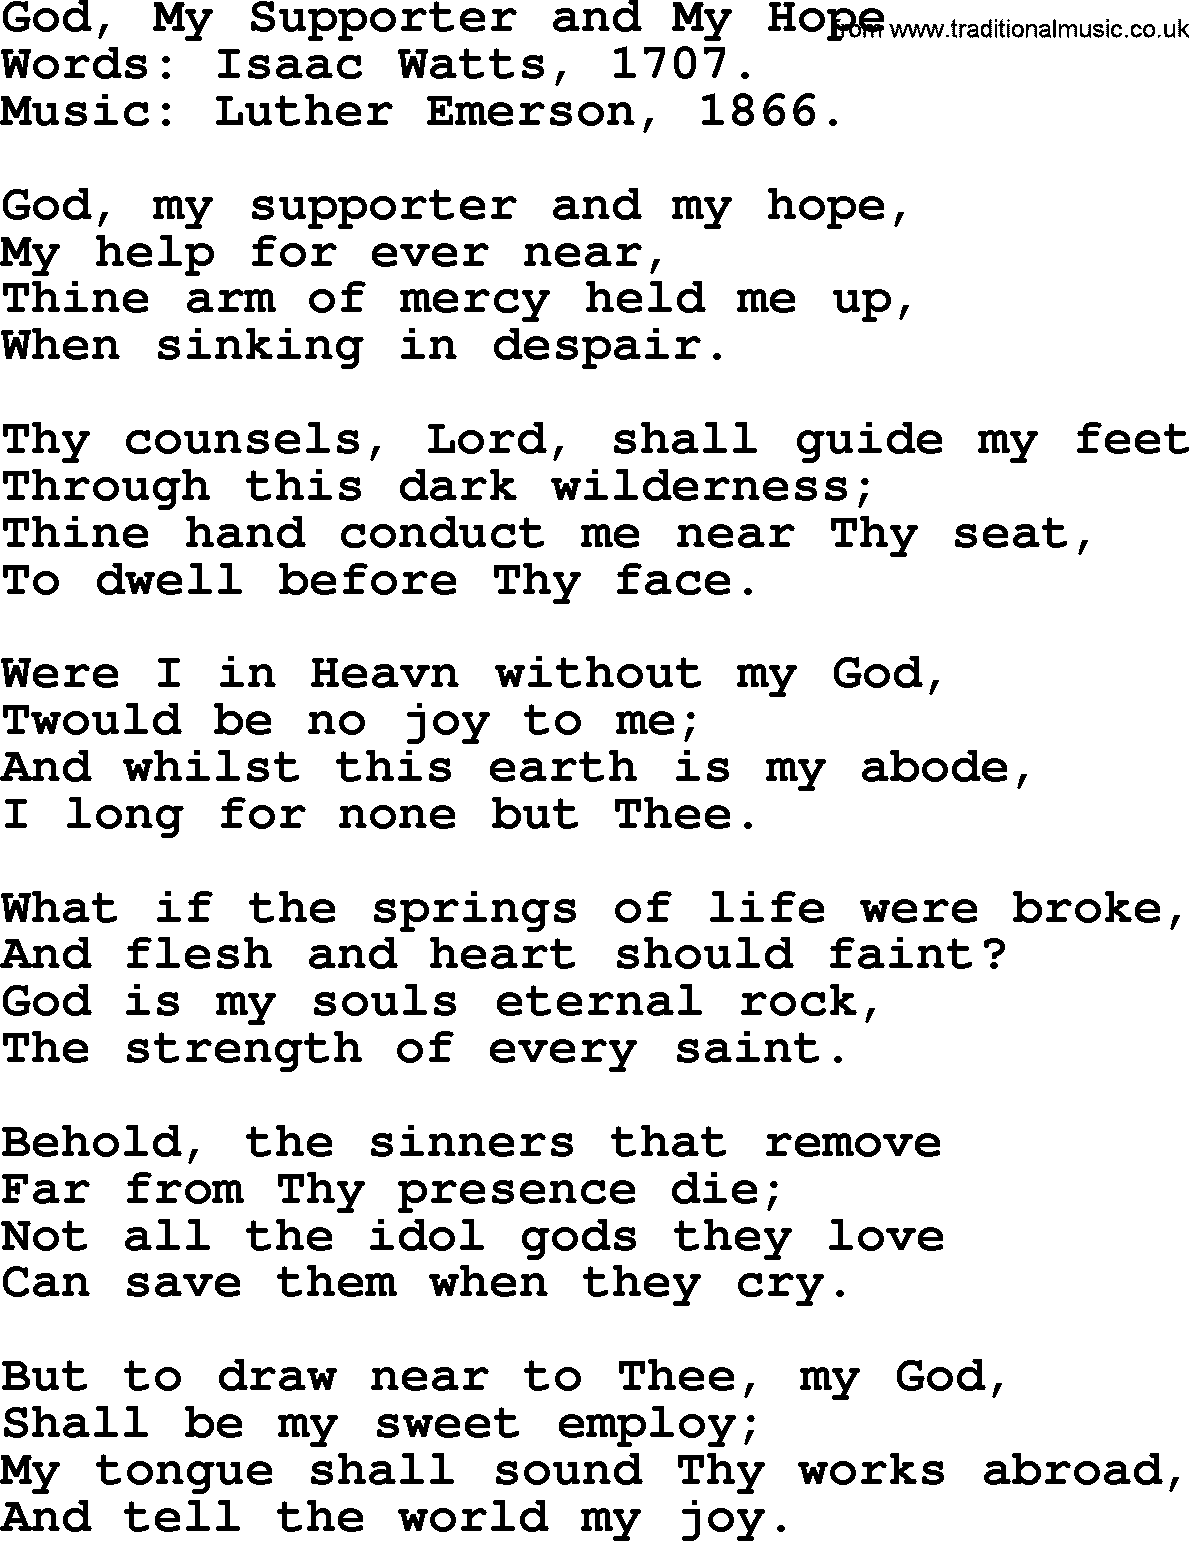 Isaac Watts Christian hymn: God, My Supporter and My Hope- lyricss